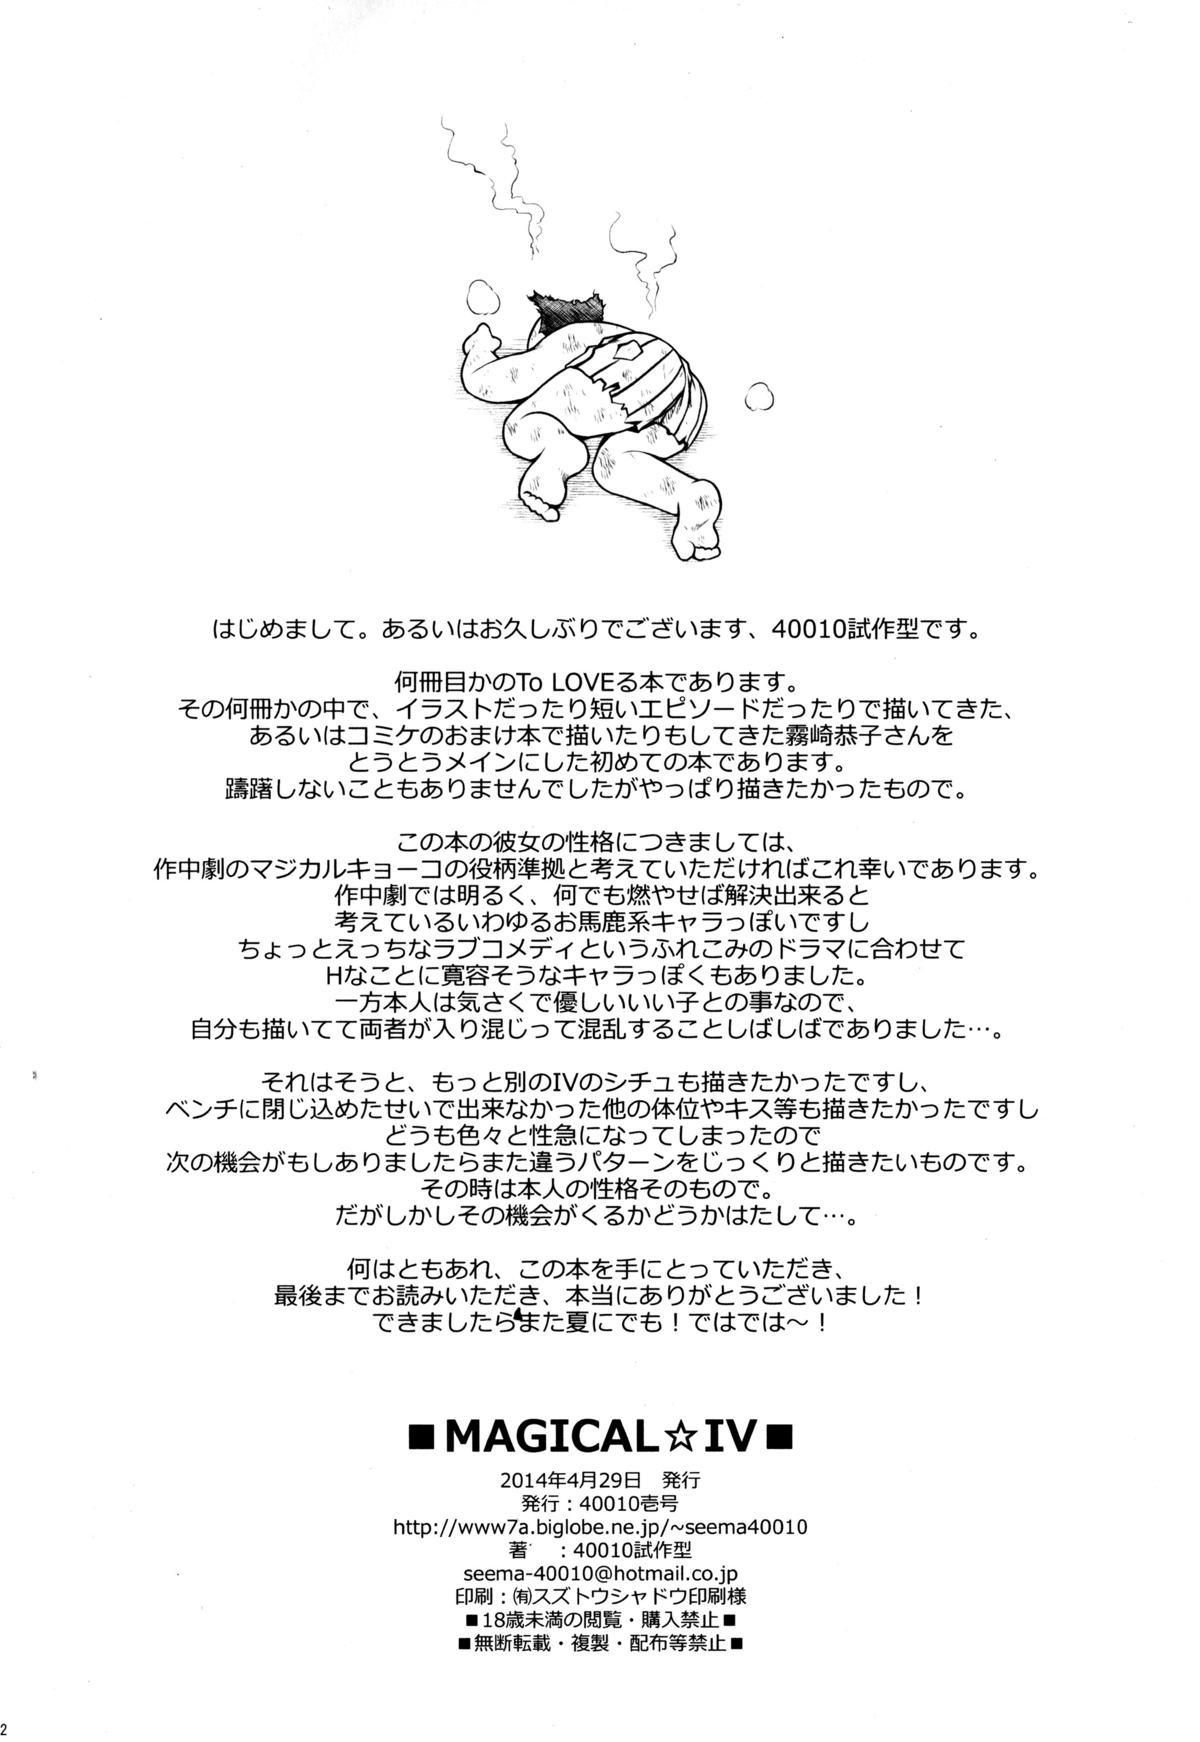 MAGICAL☆IV 20